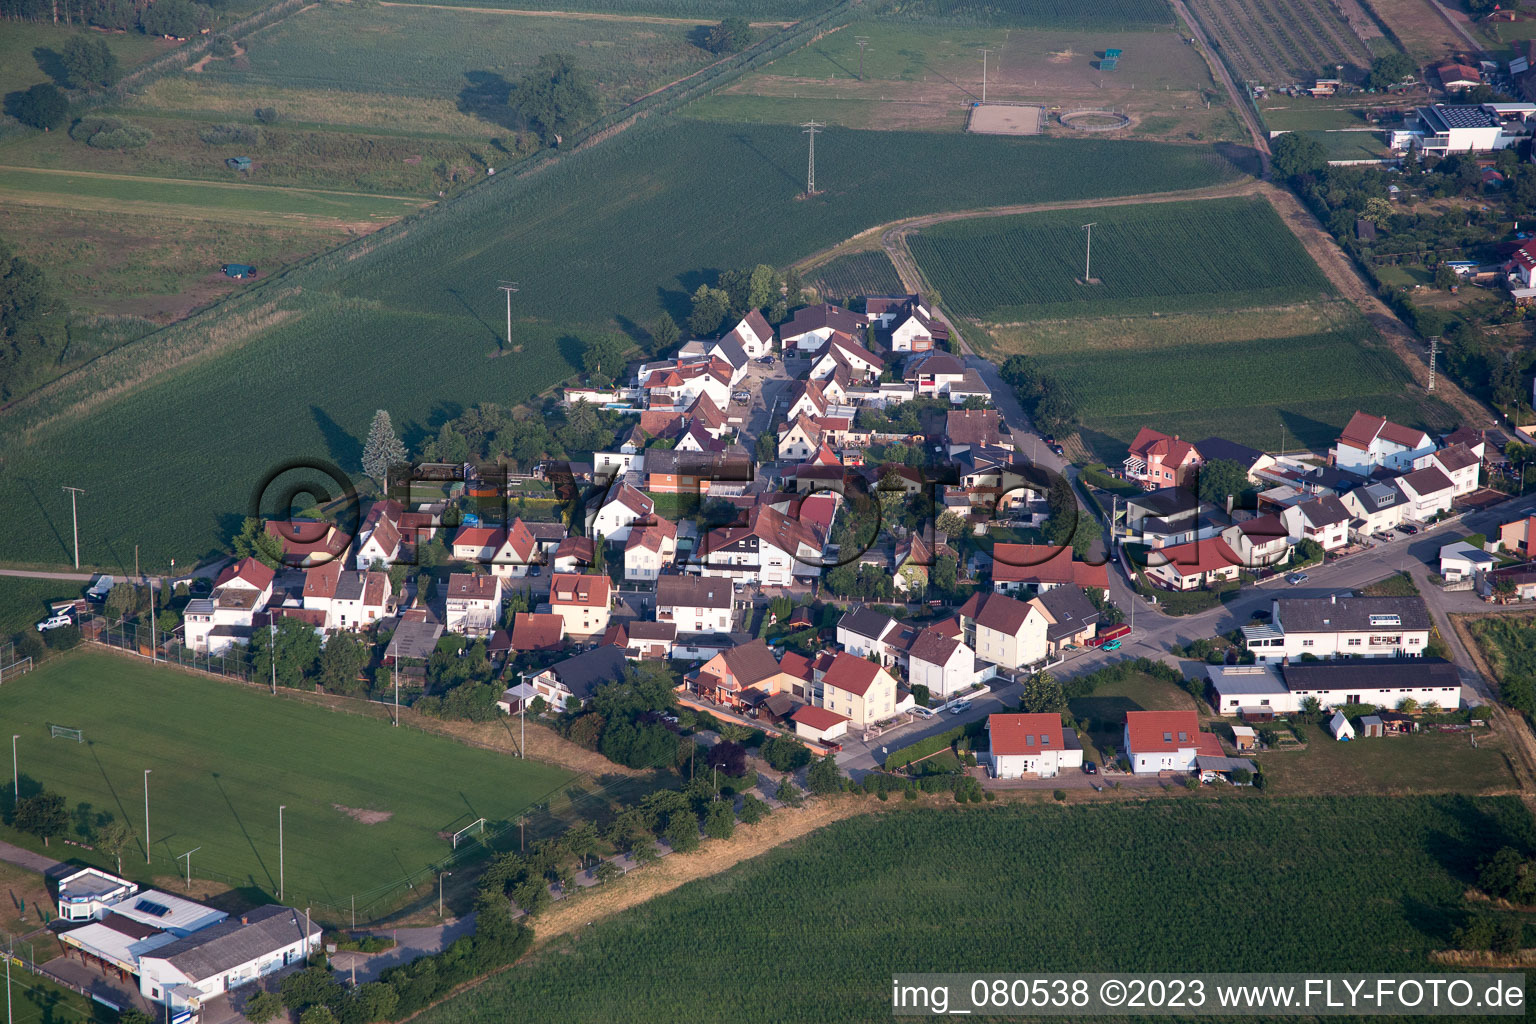 Wiesenstr in the district Mechtersheim in Römerberg in the state Rhineland-Palatinate, Germany